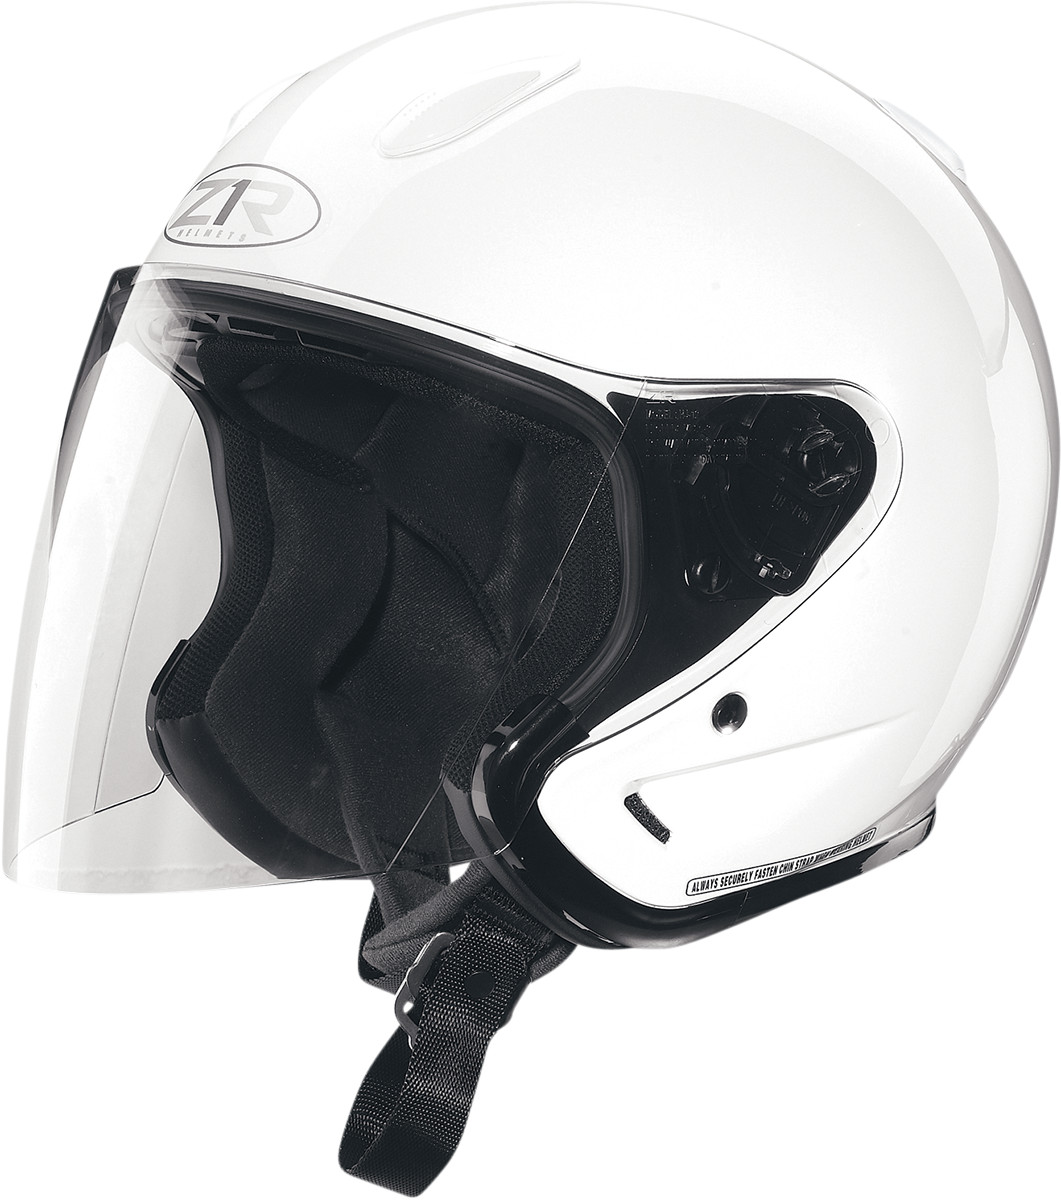 Z1R Adult White Ace 3/4 Open Face Motorcycle Helmet 2017 | eBay